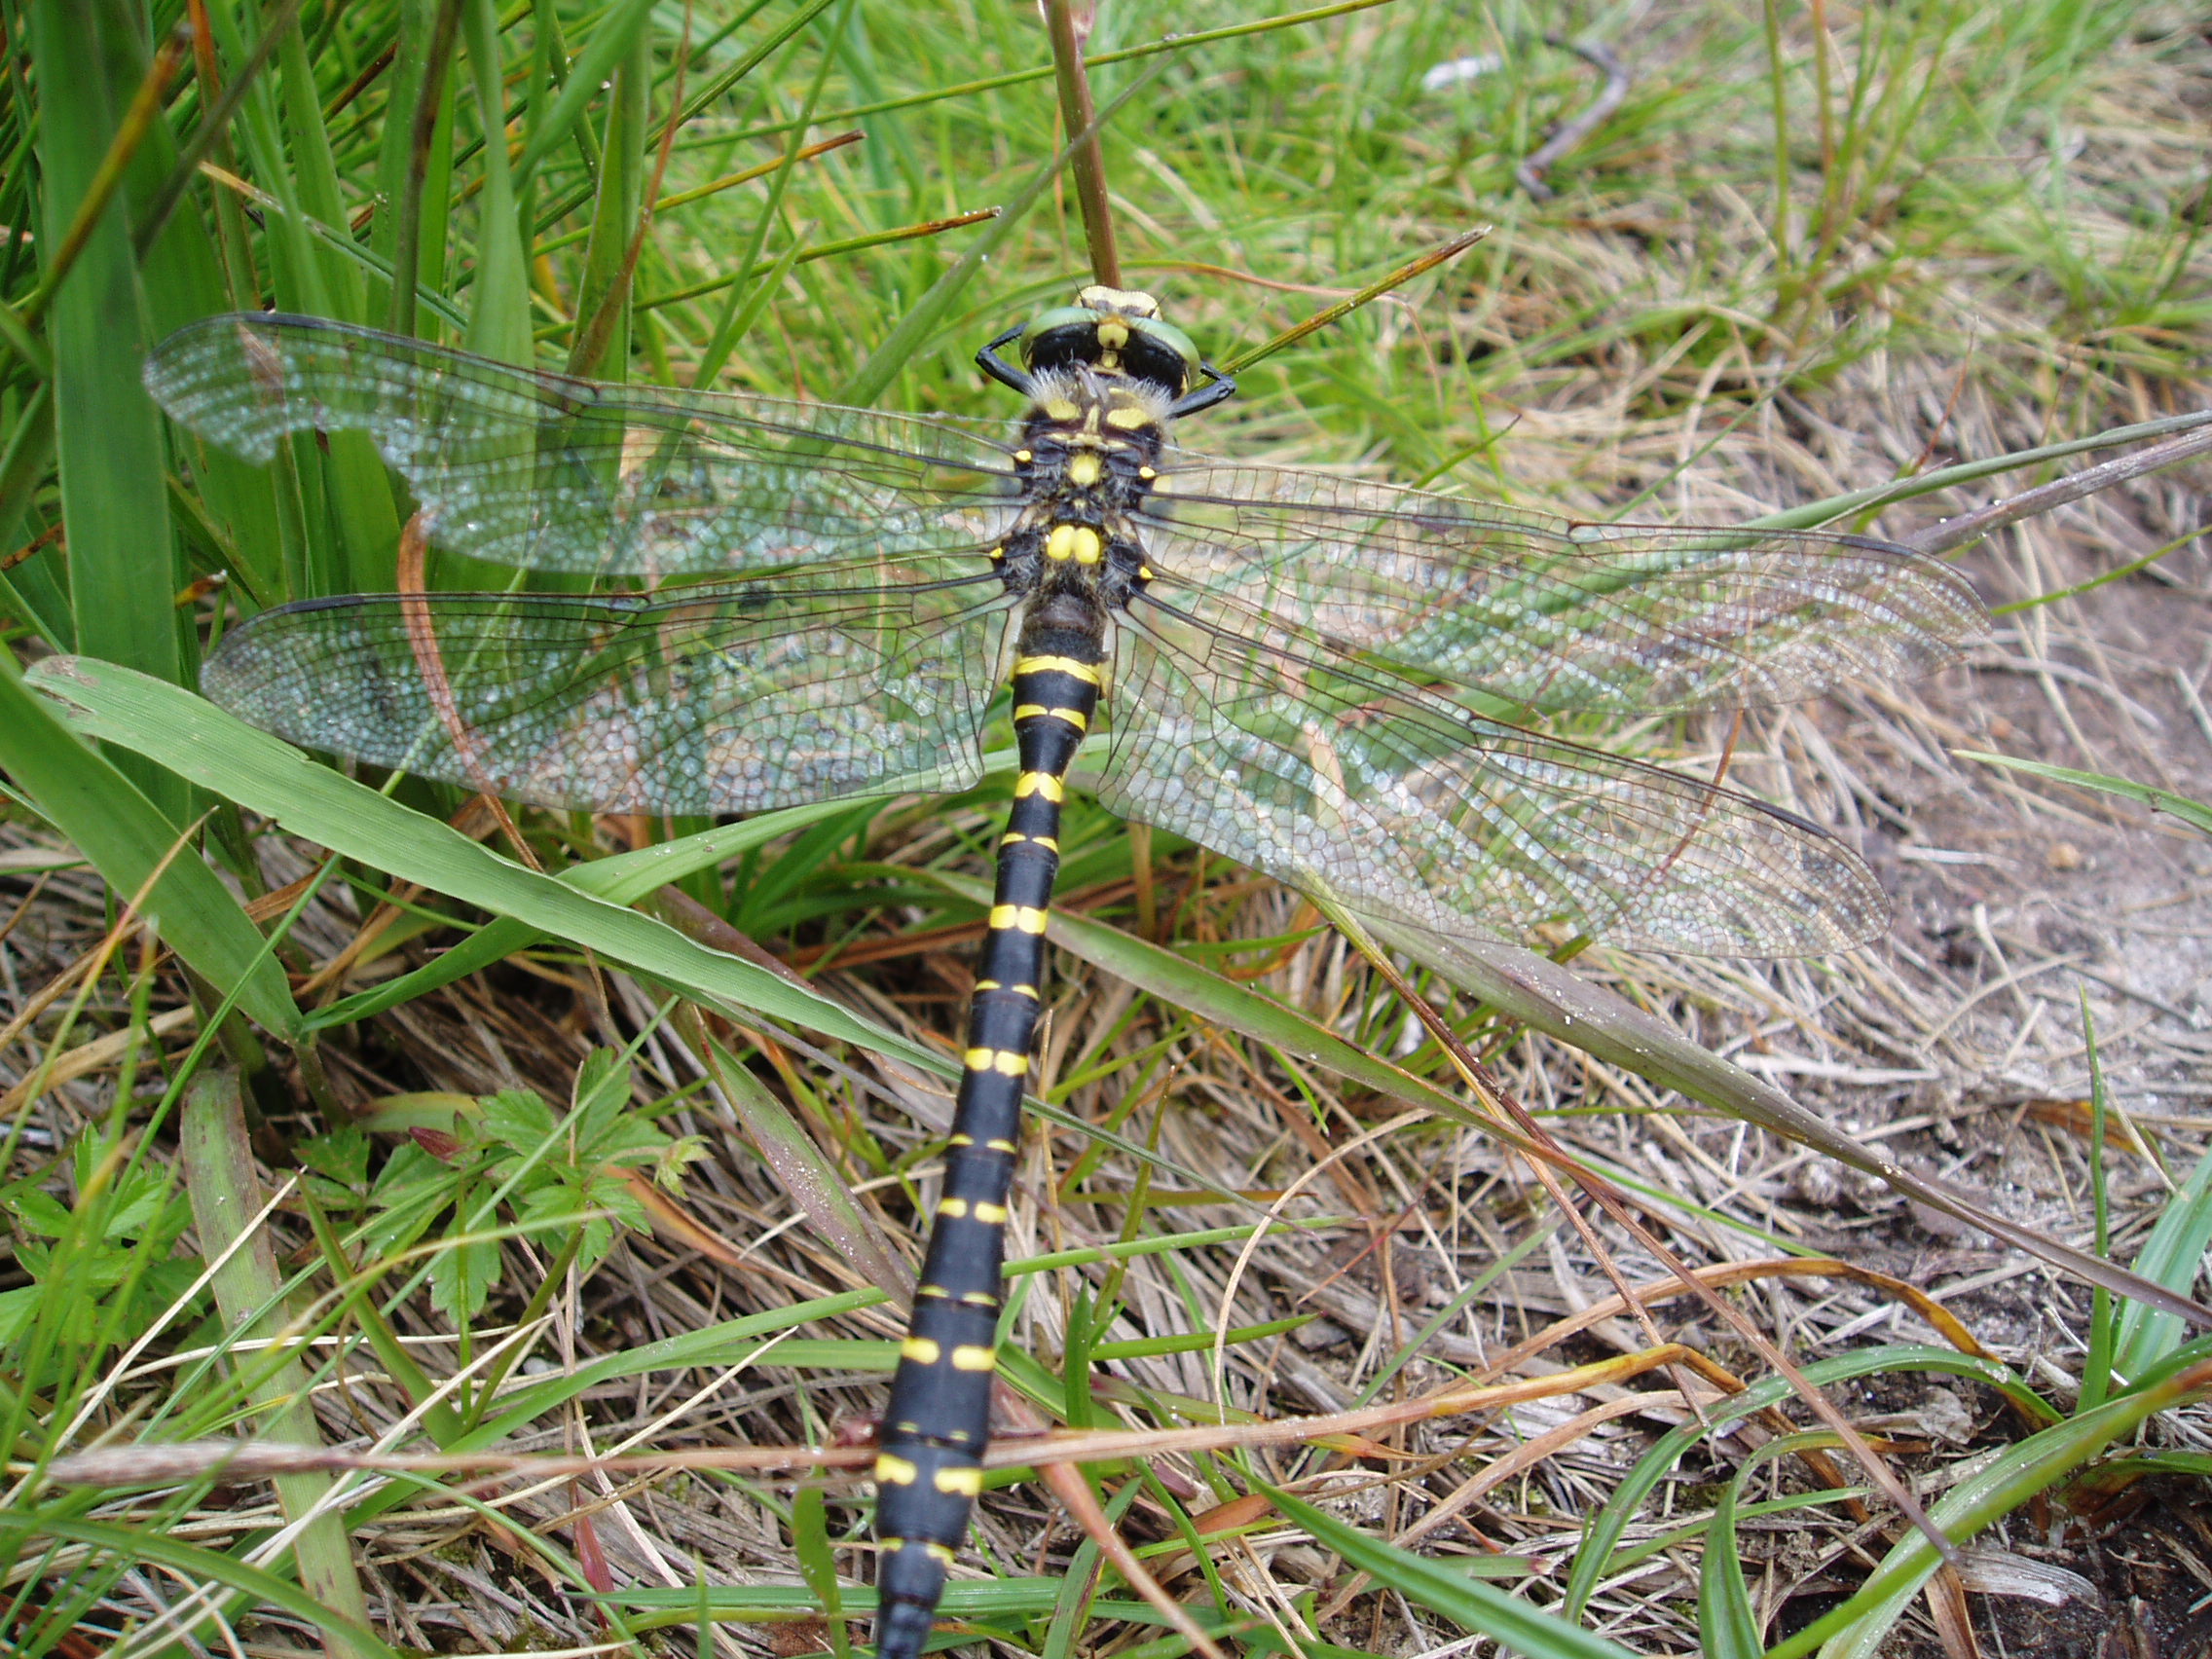 Golden rigged dragonfly ecology surveys